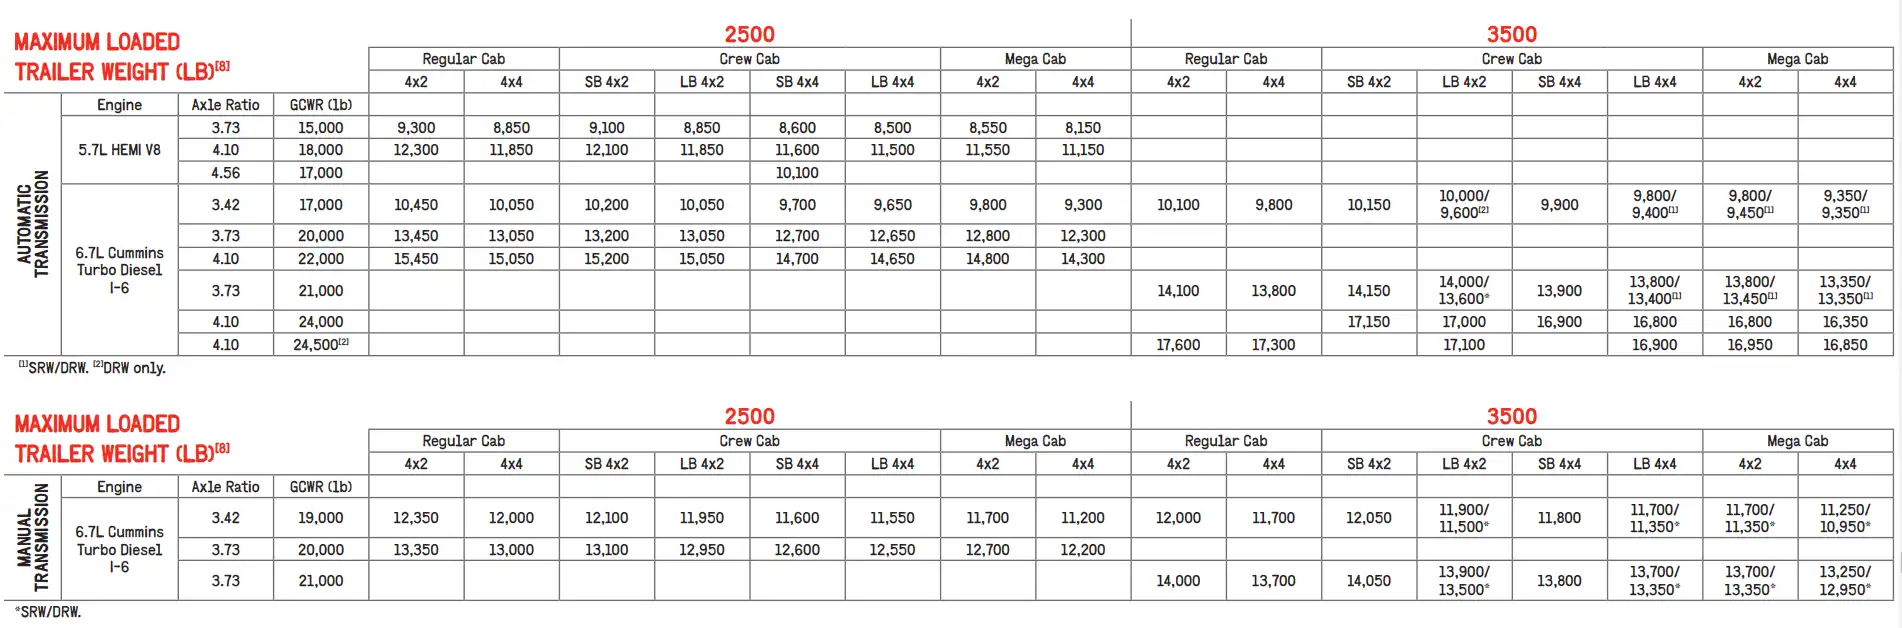 2011 Dodge RAM 3500 Towing Capacity Payload Capacity Chart